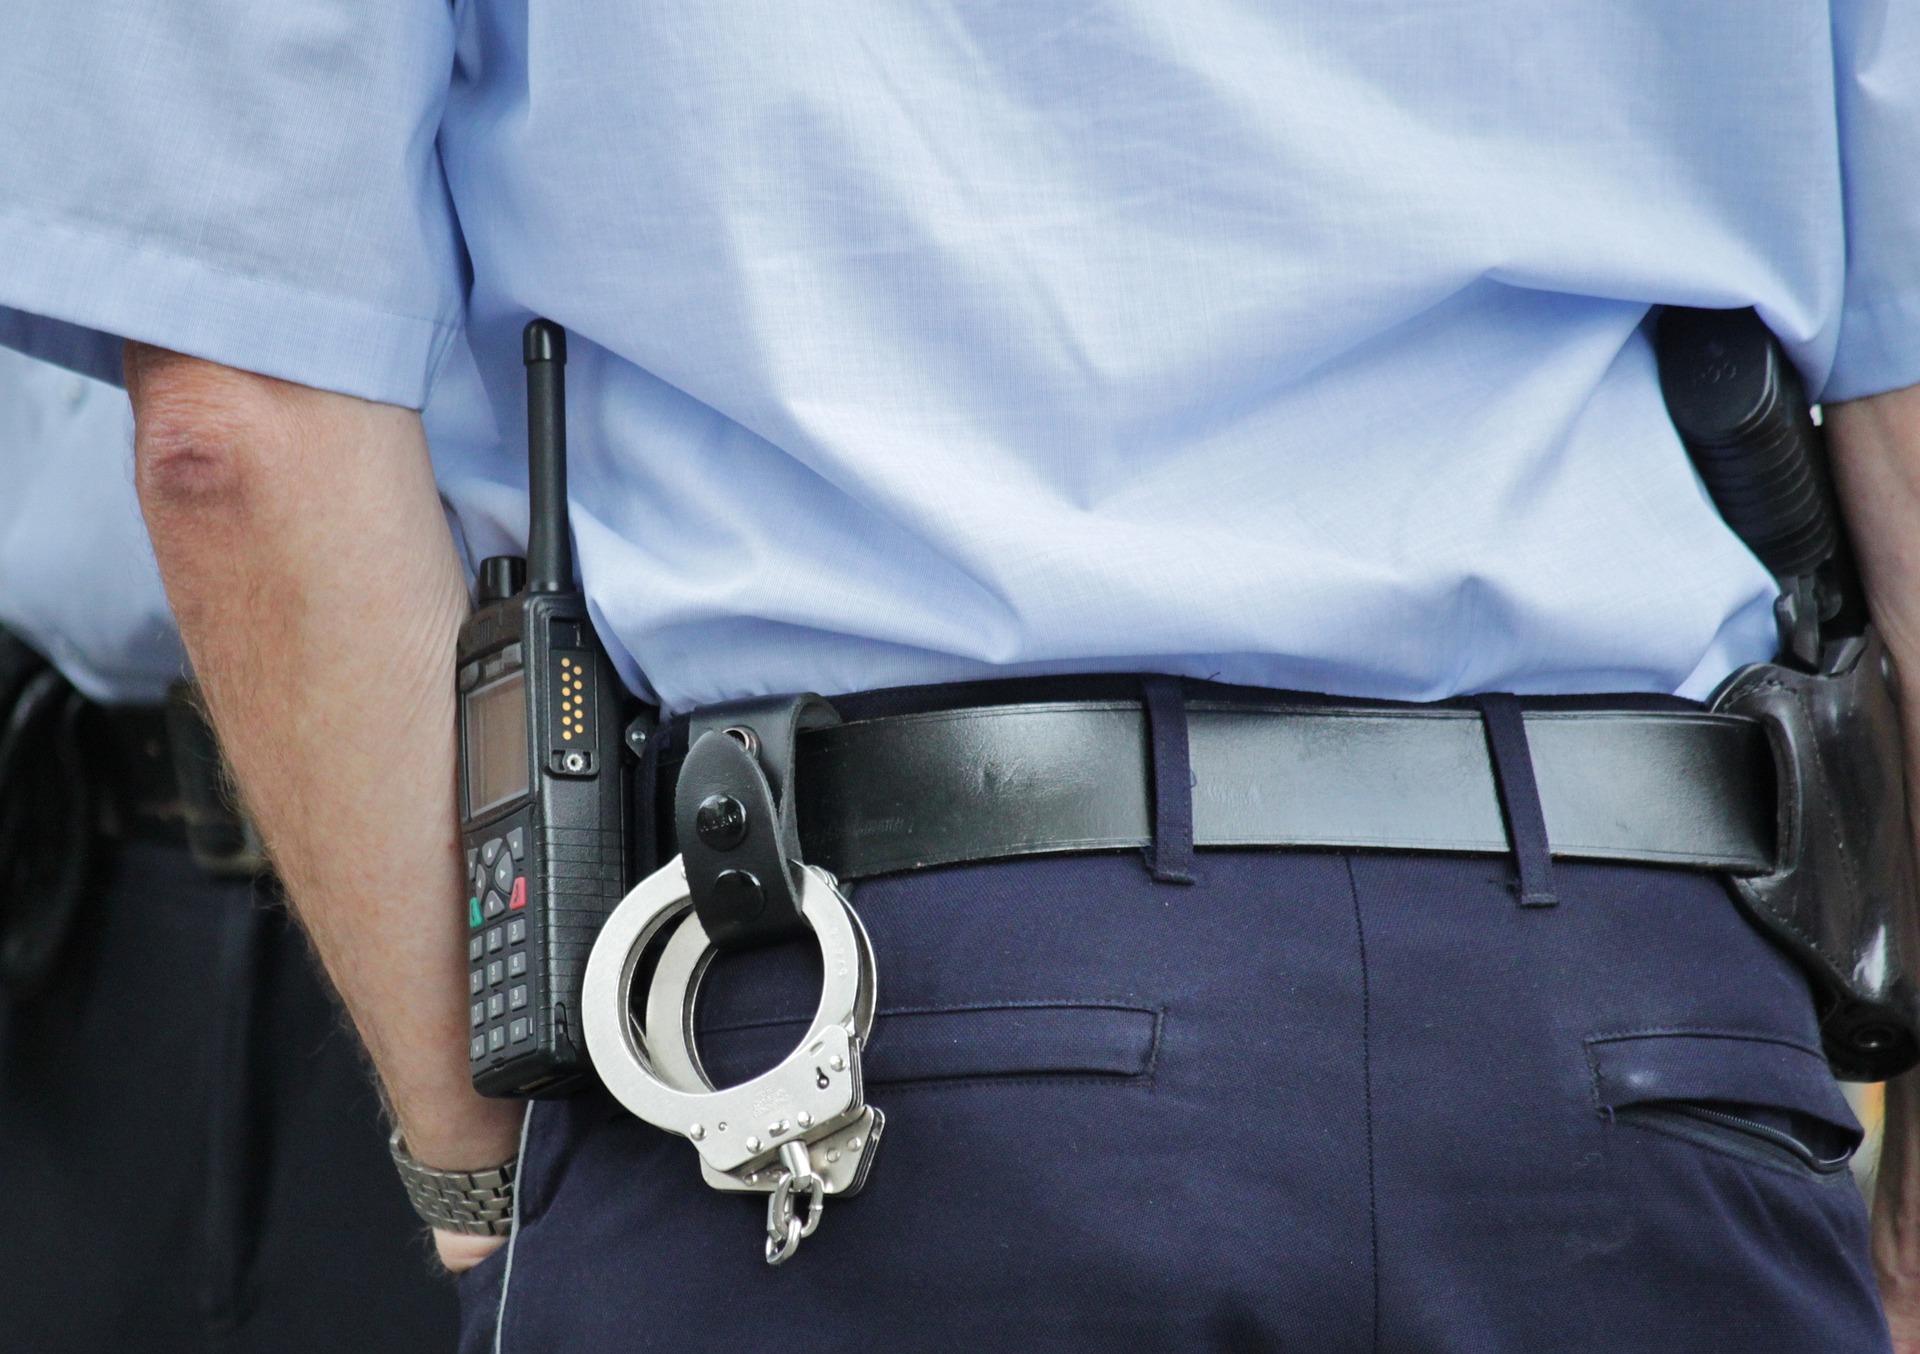 A police officer | Source: Pixabay